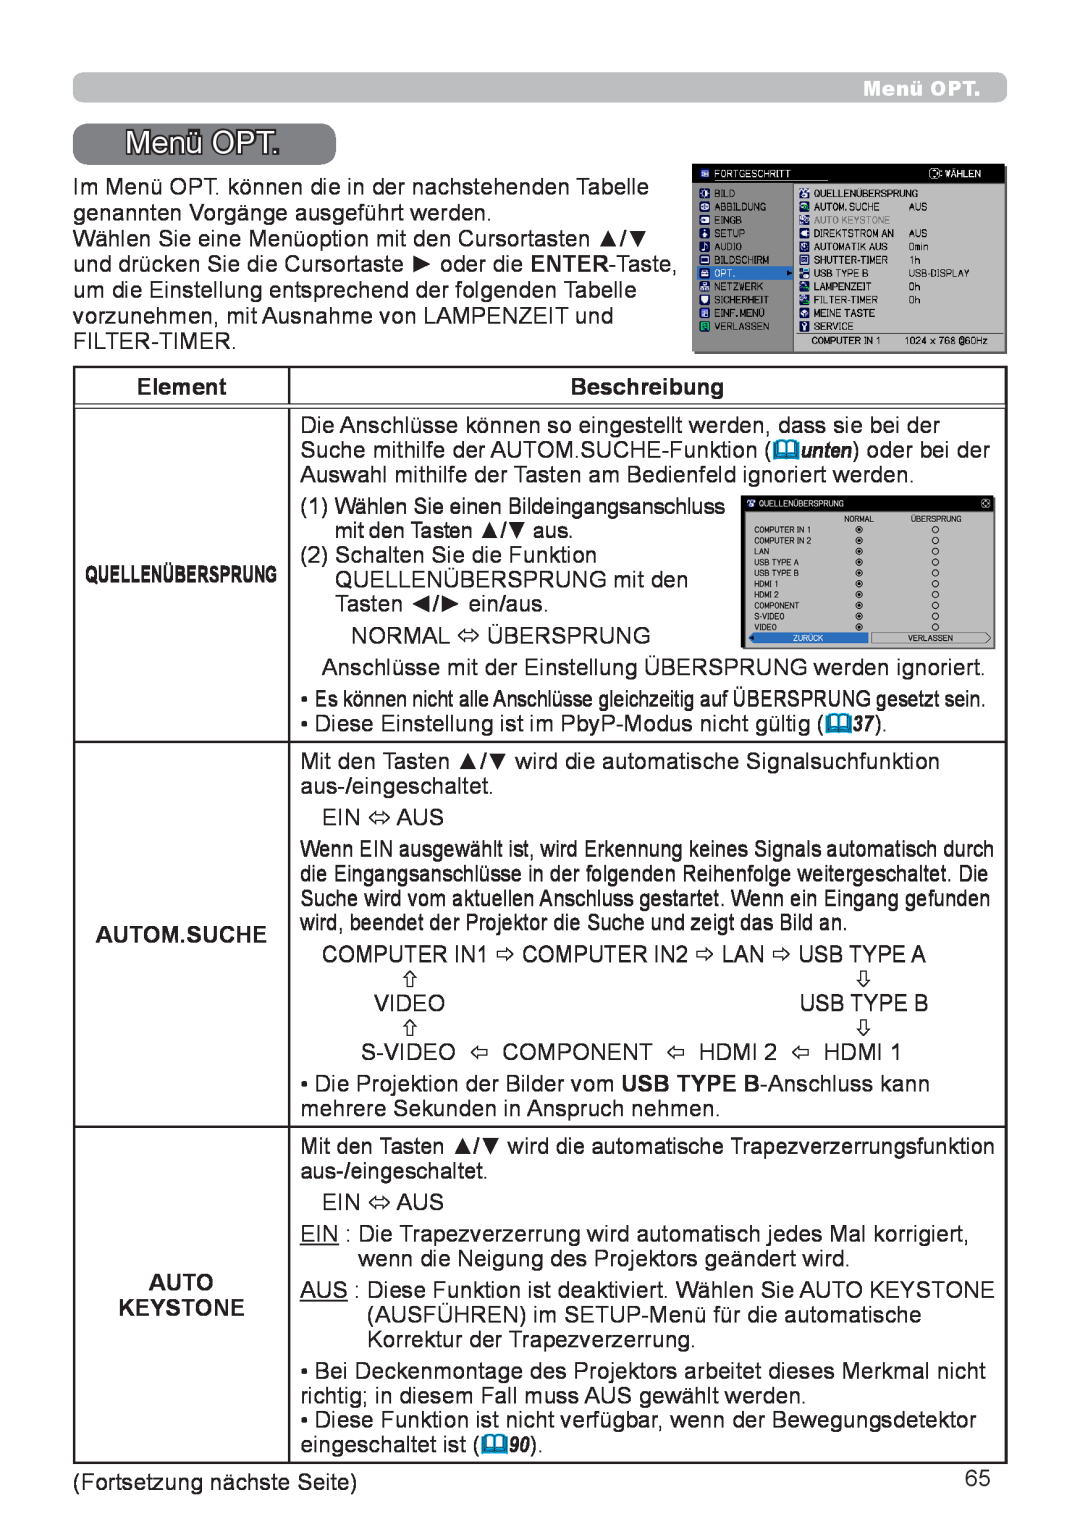 InFocus IN5132 user manual Menü OPT, Element, Beschreibung, Autom.Suche, Keystone 